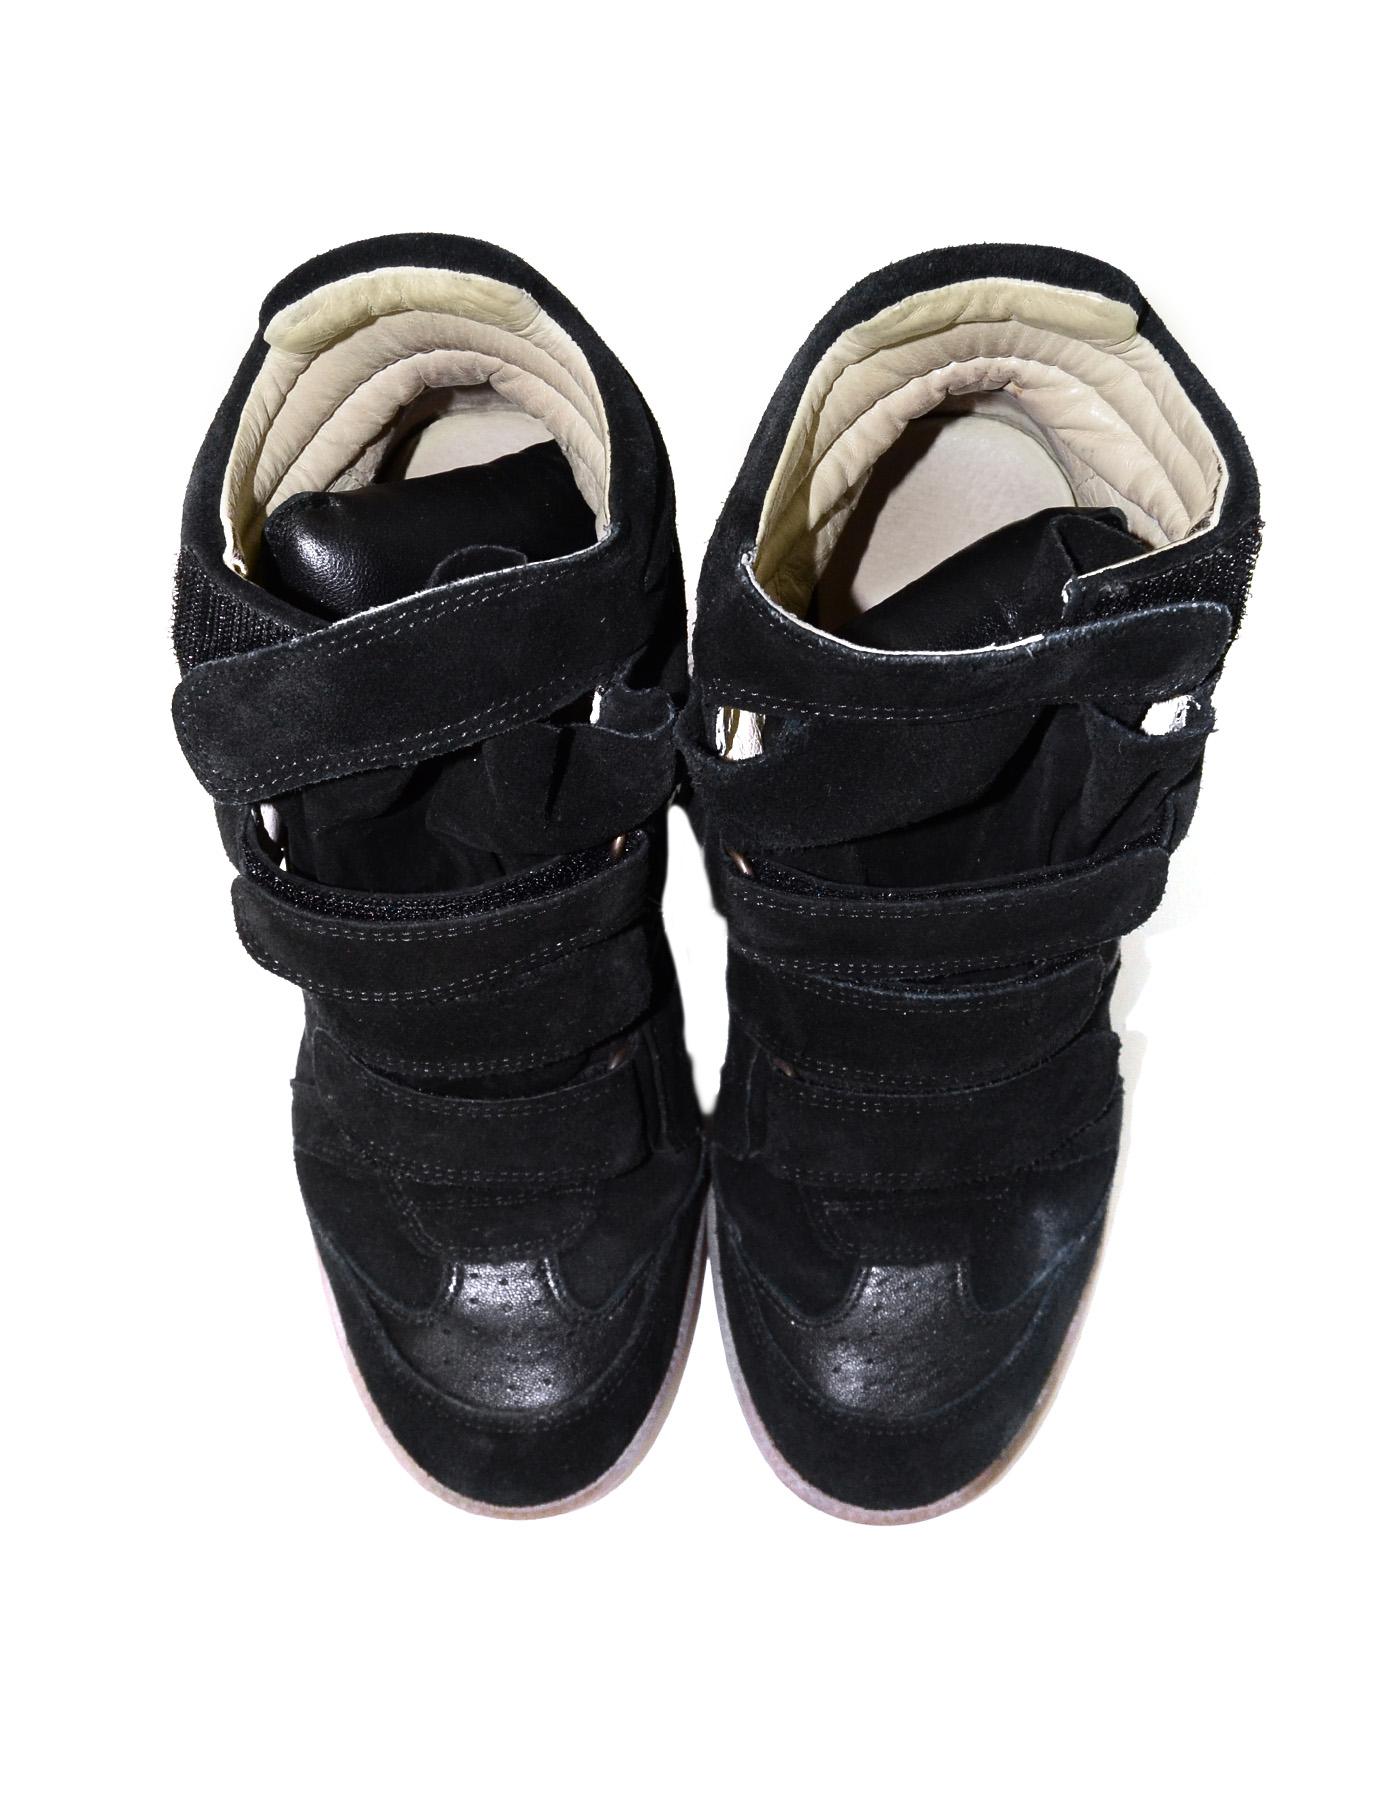 Isabel Marant Black Suede Beckett Wedge Sneakers Sz 38 1